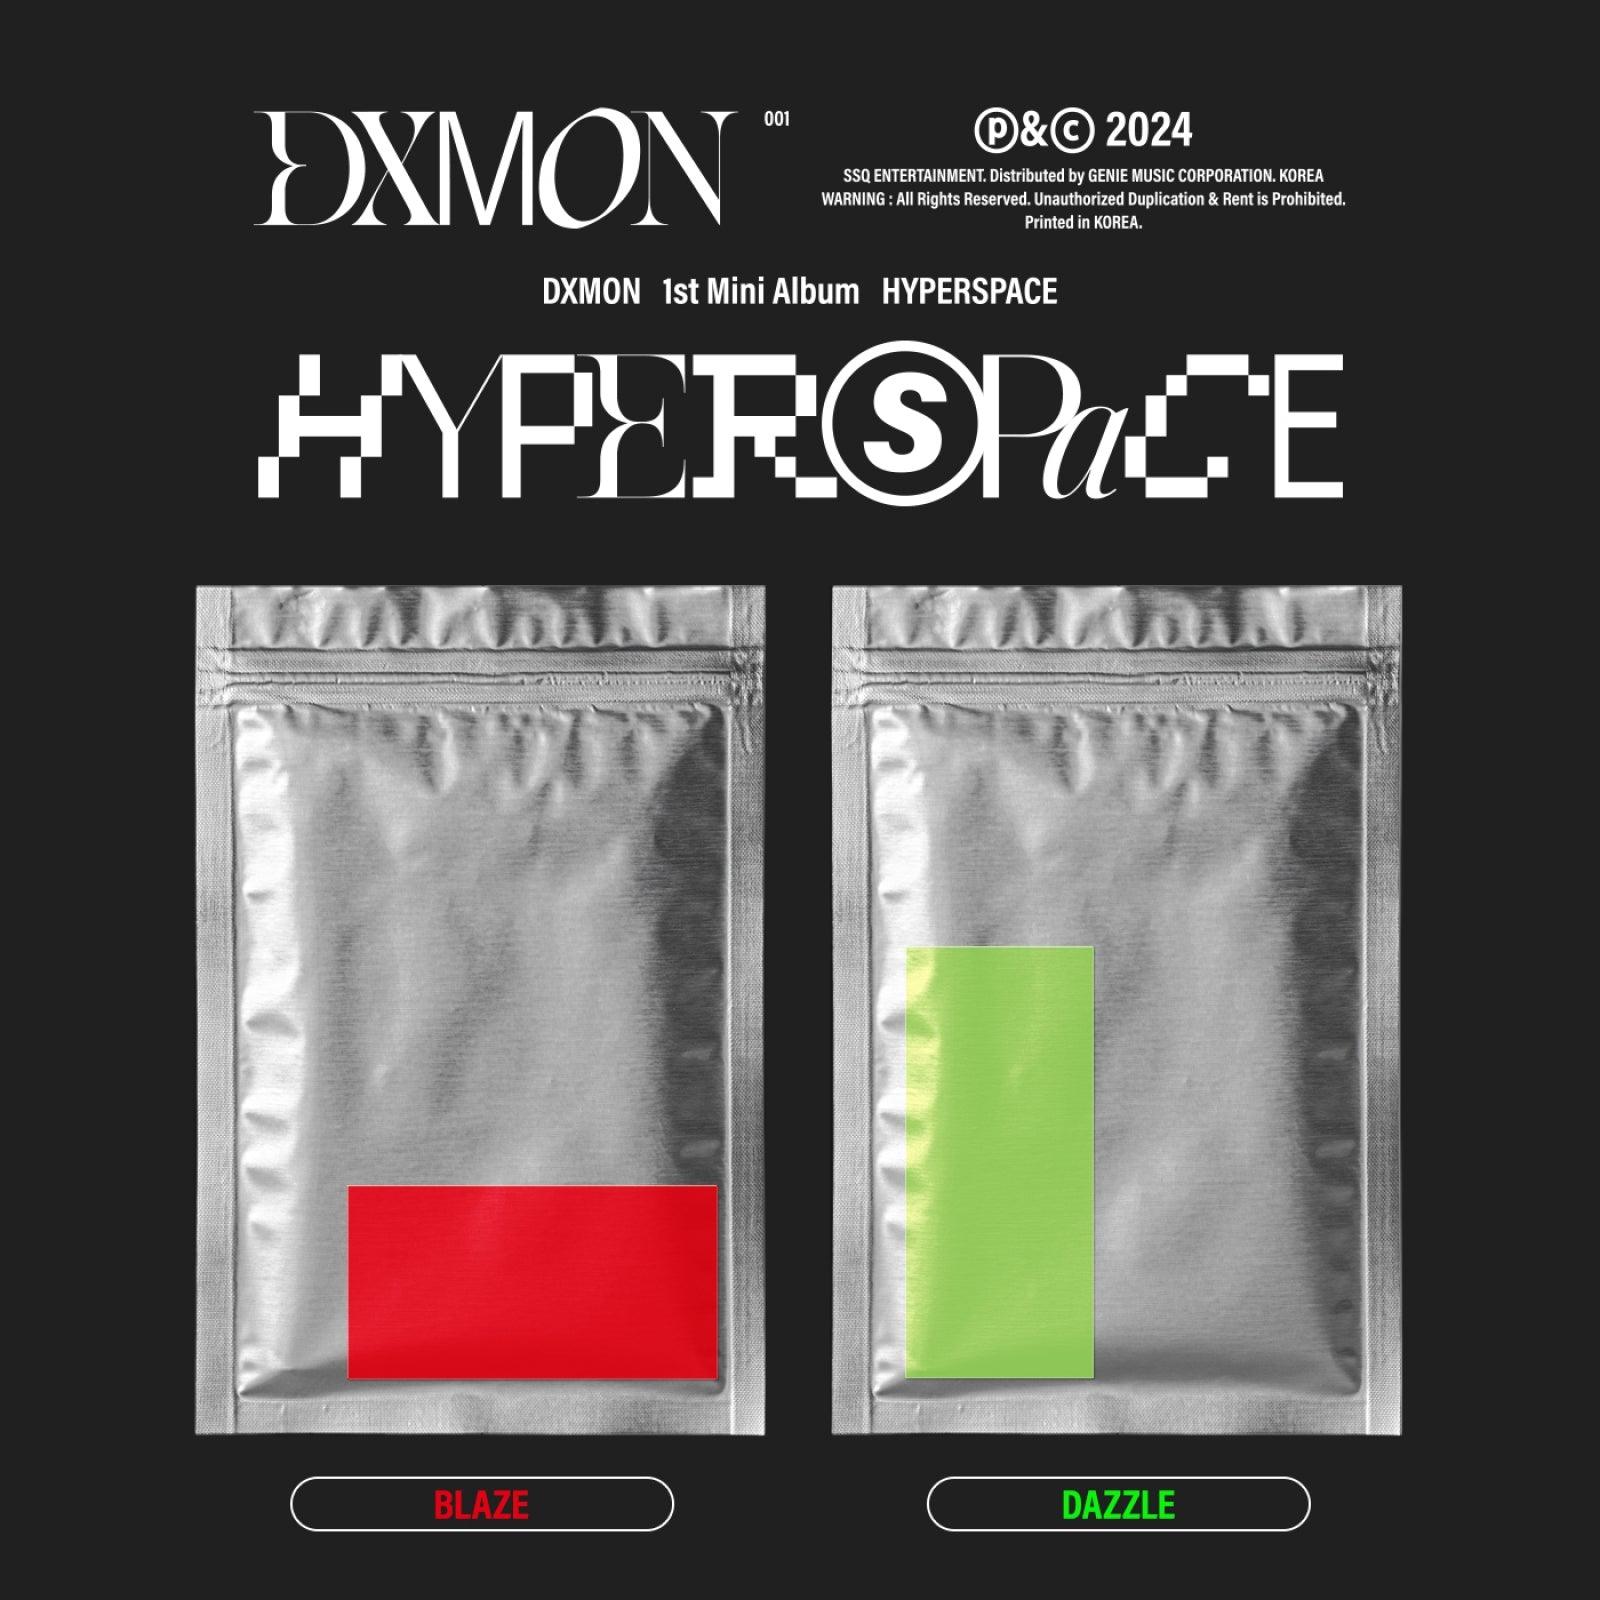 DXMON - HYPERSPACE / 1ST MINI ALBUM - Shopping Around the World with Goodsnjoy